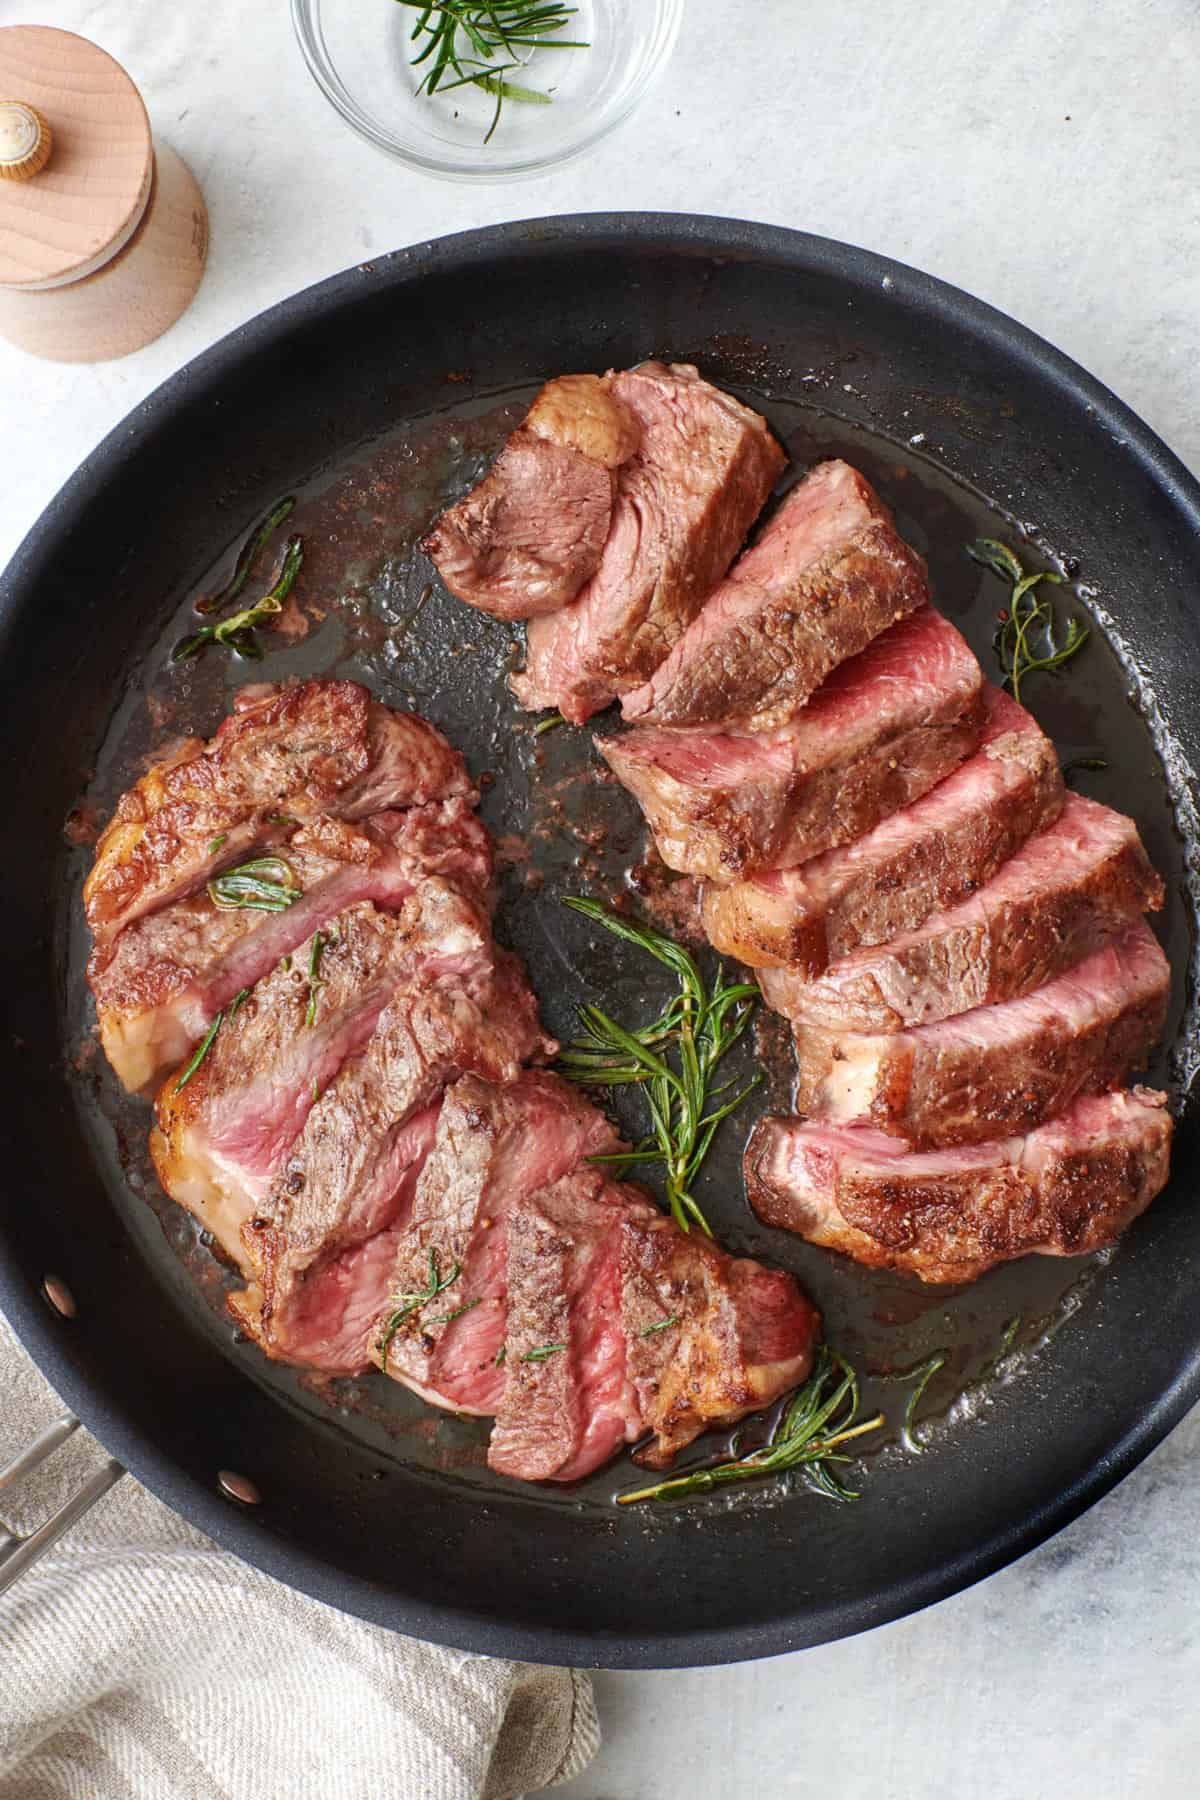 Medium-rare NY strip steaks sliced on a skillet with rosemary.